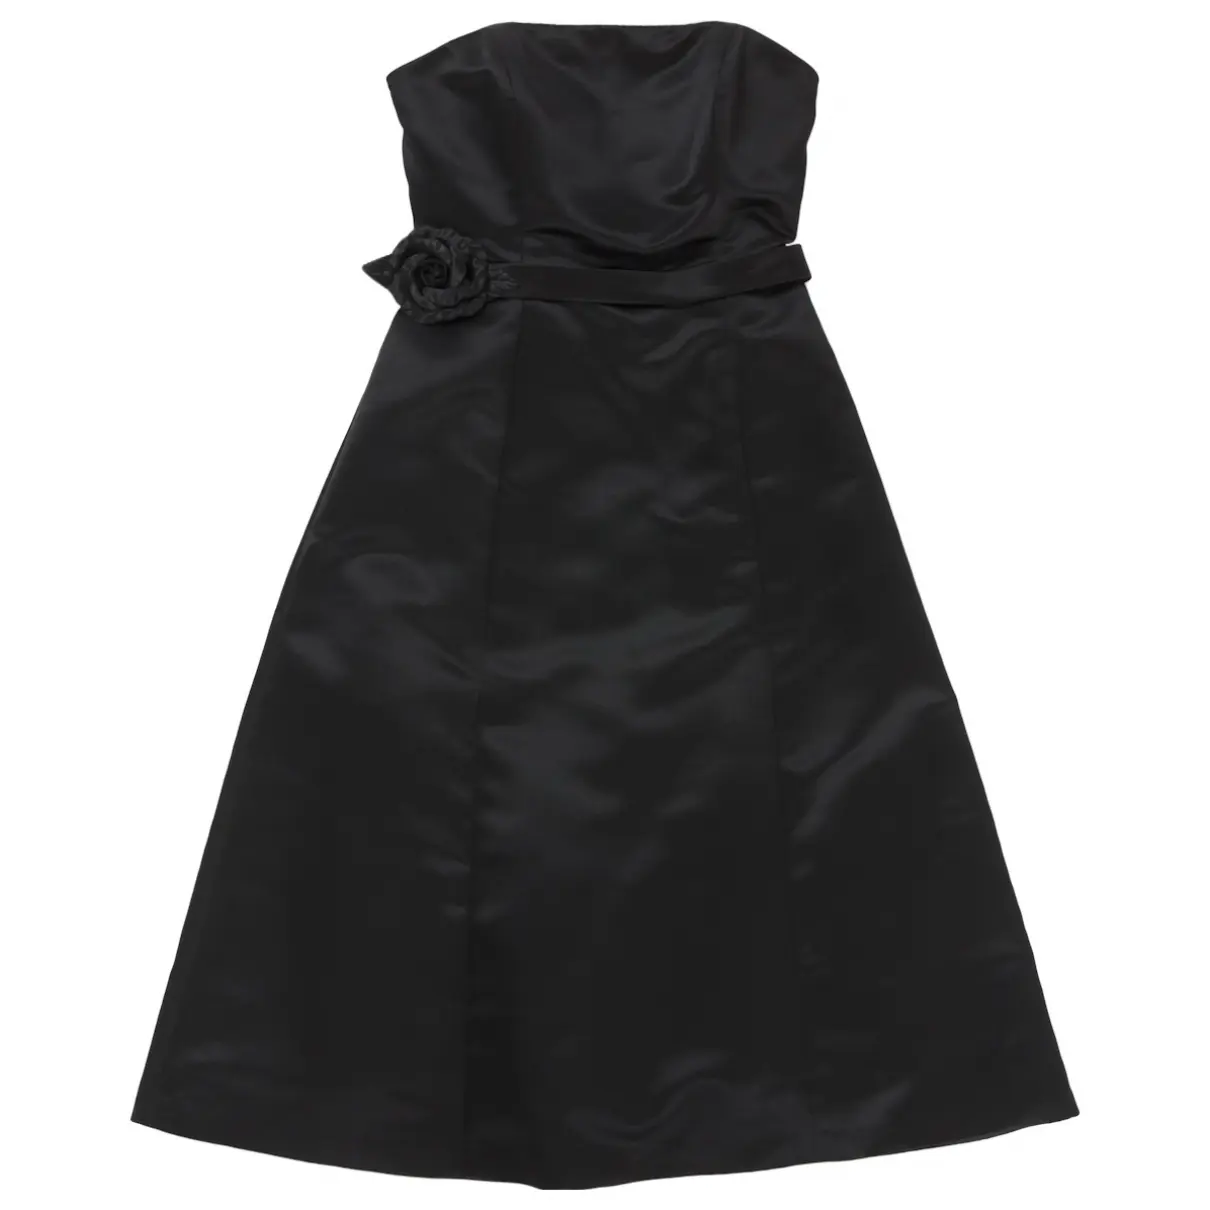 Black Polyester Dress Bcbg Max Azria